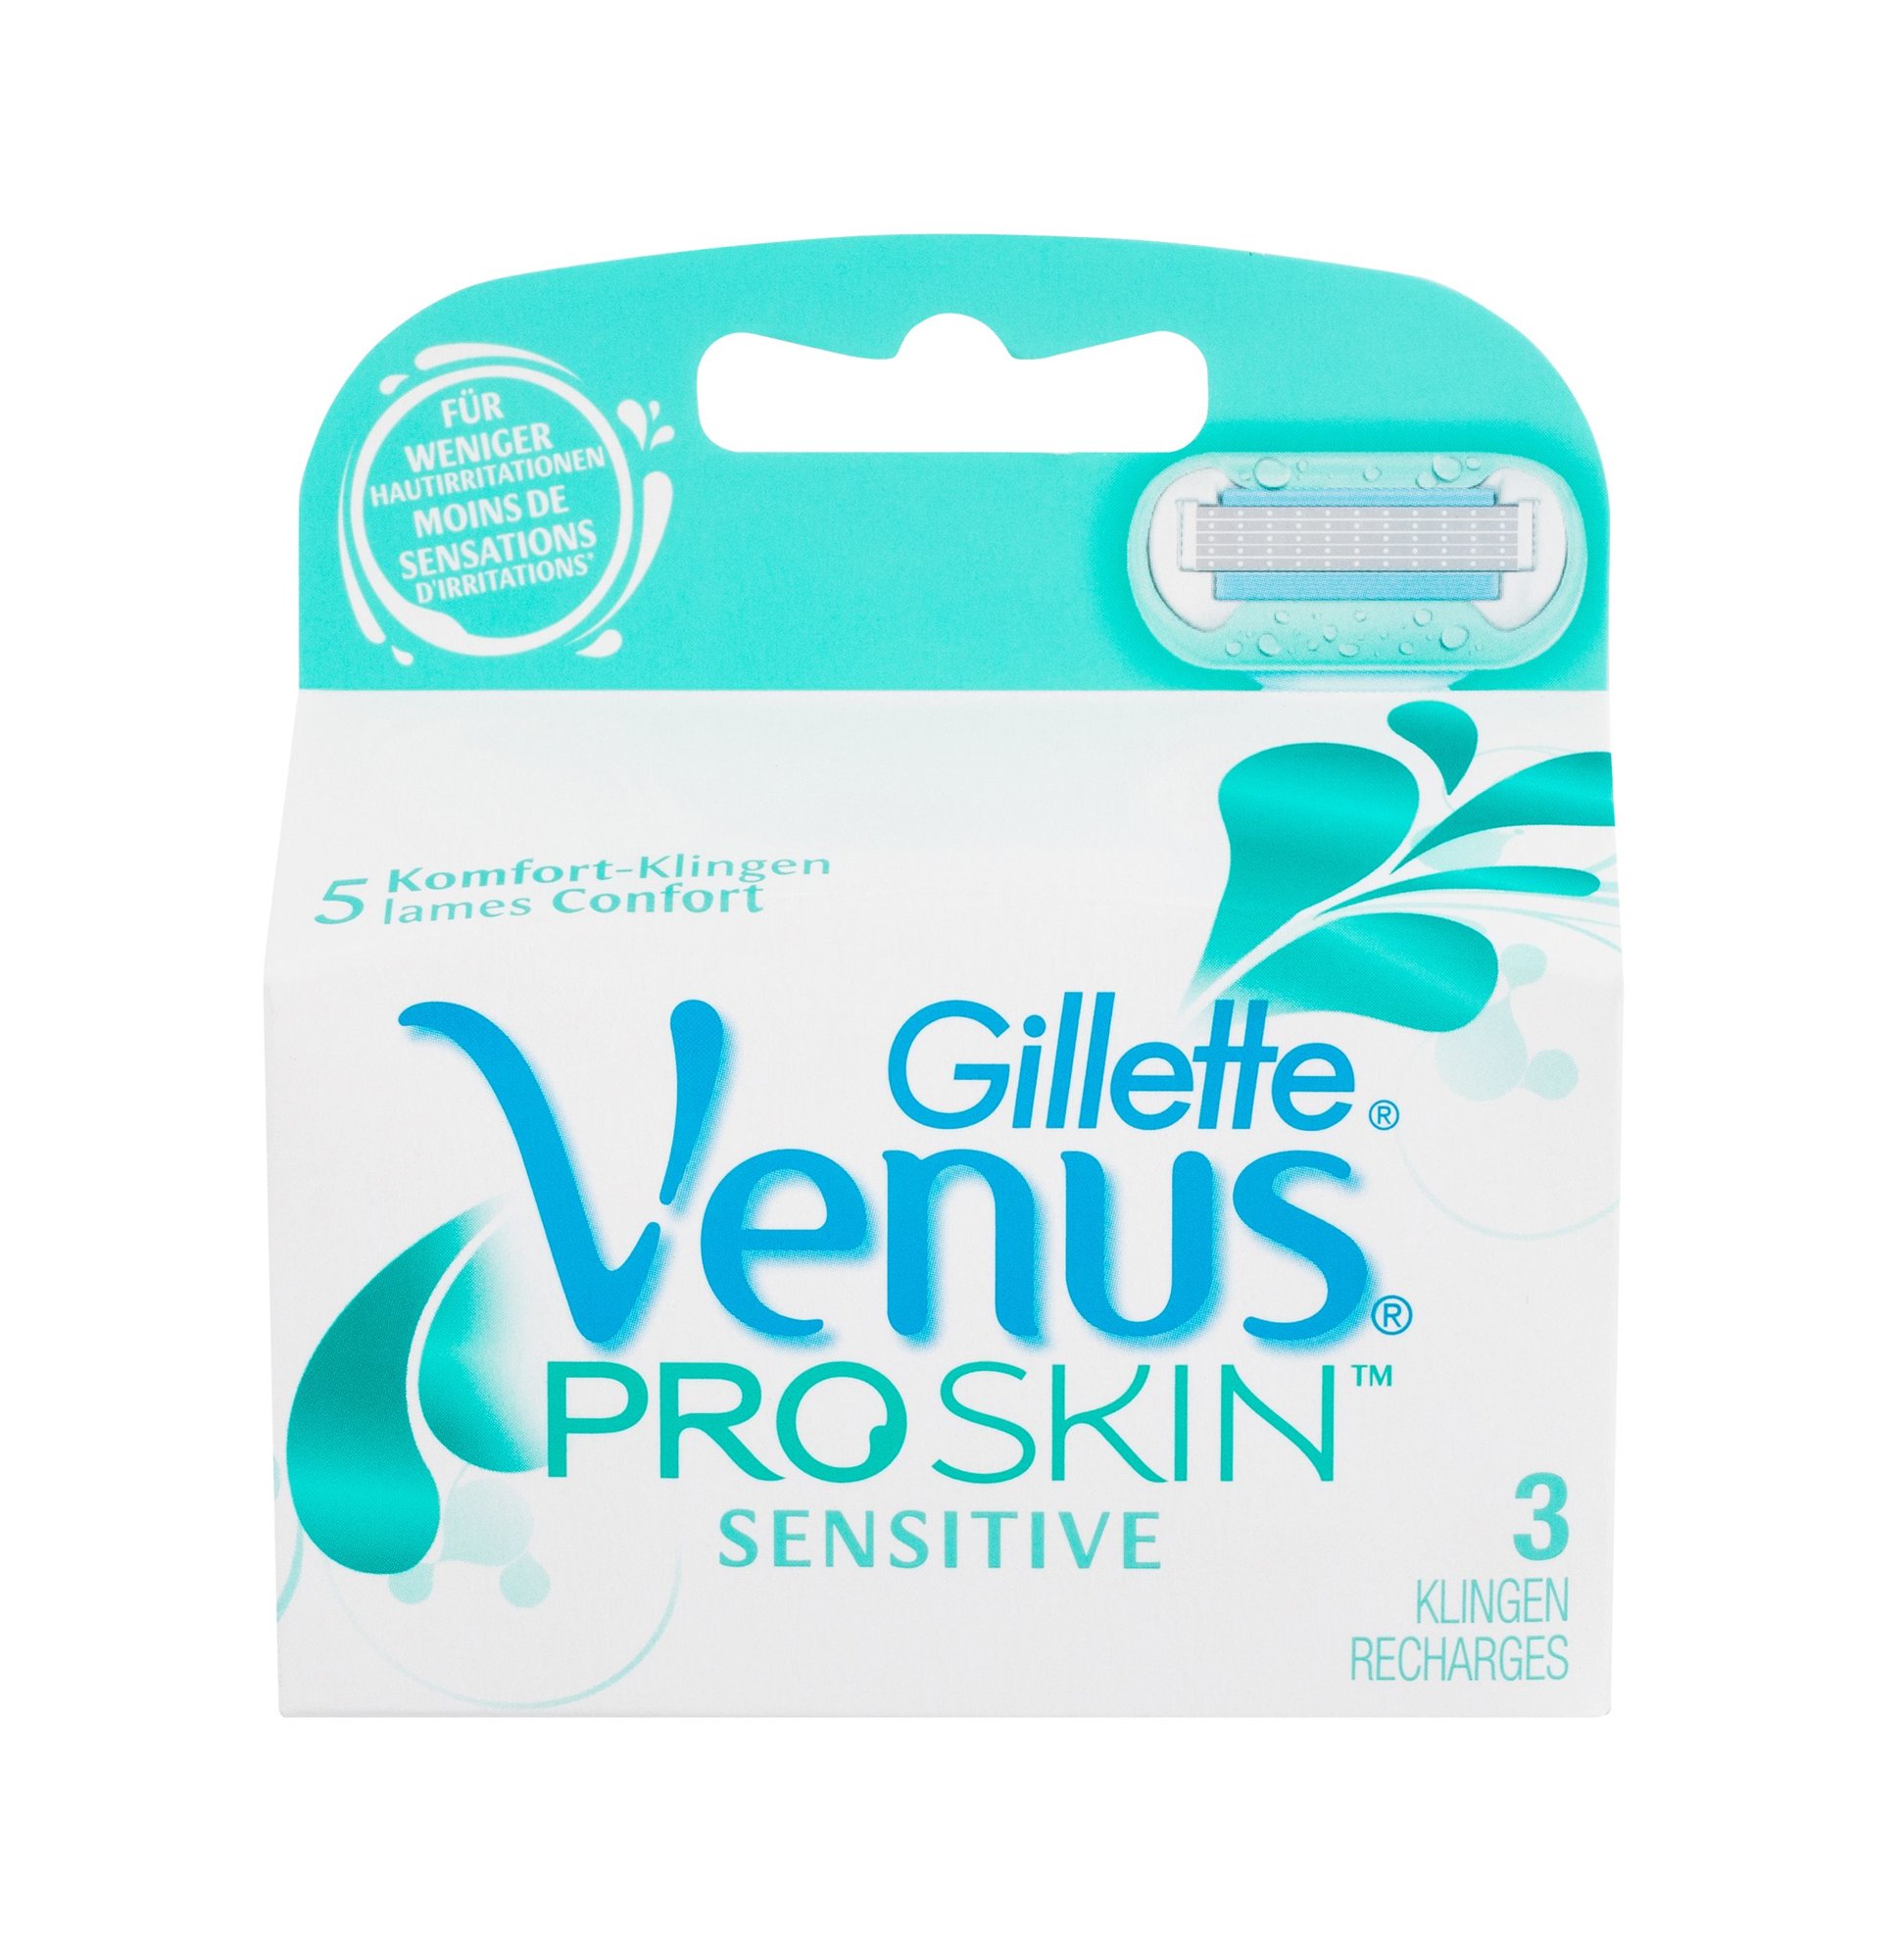 Gillette Venus ProSkin skustuvo galvutė